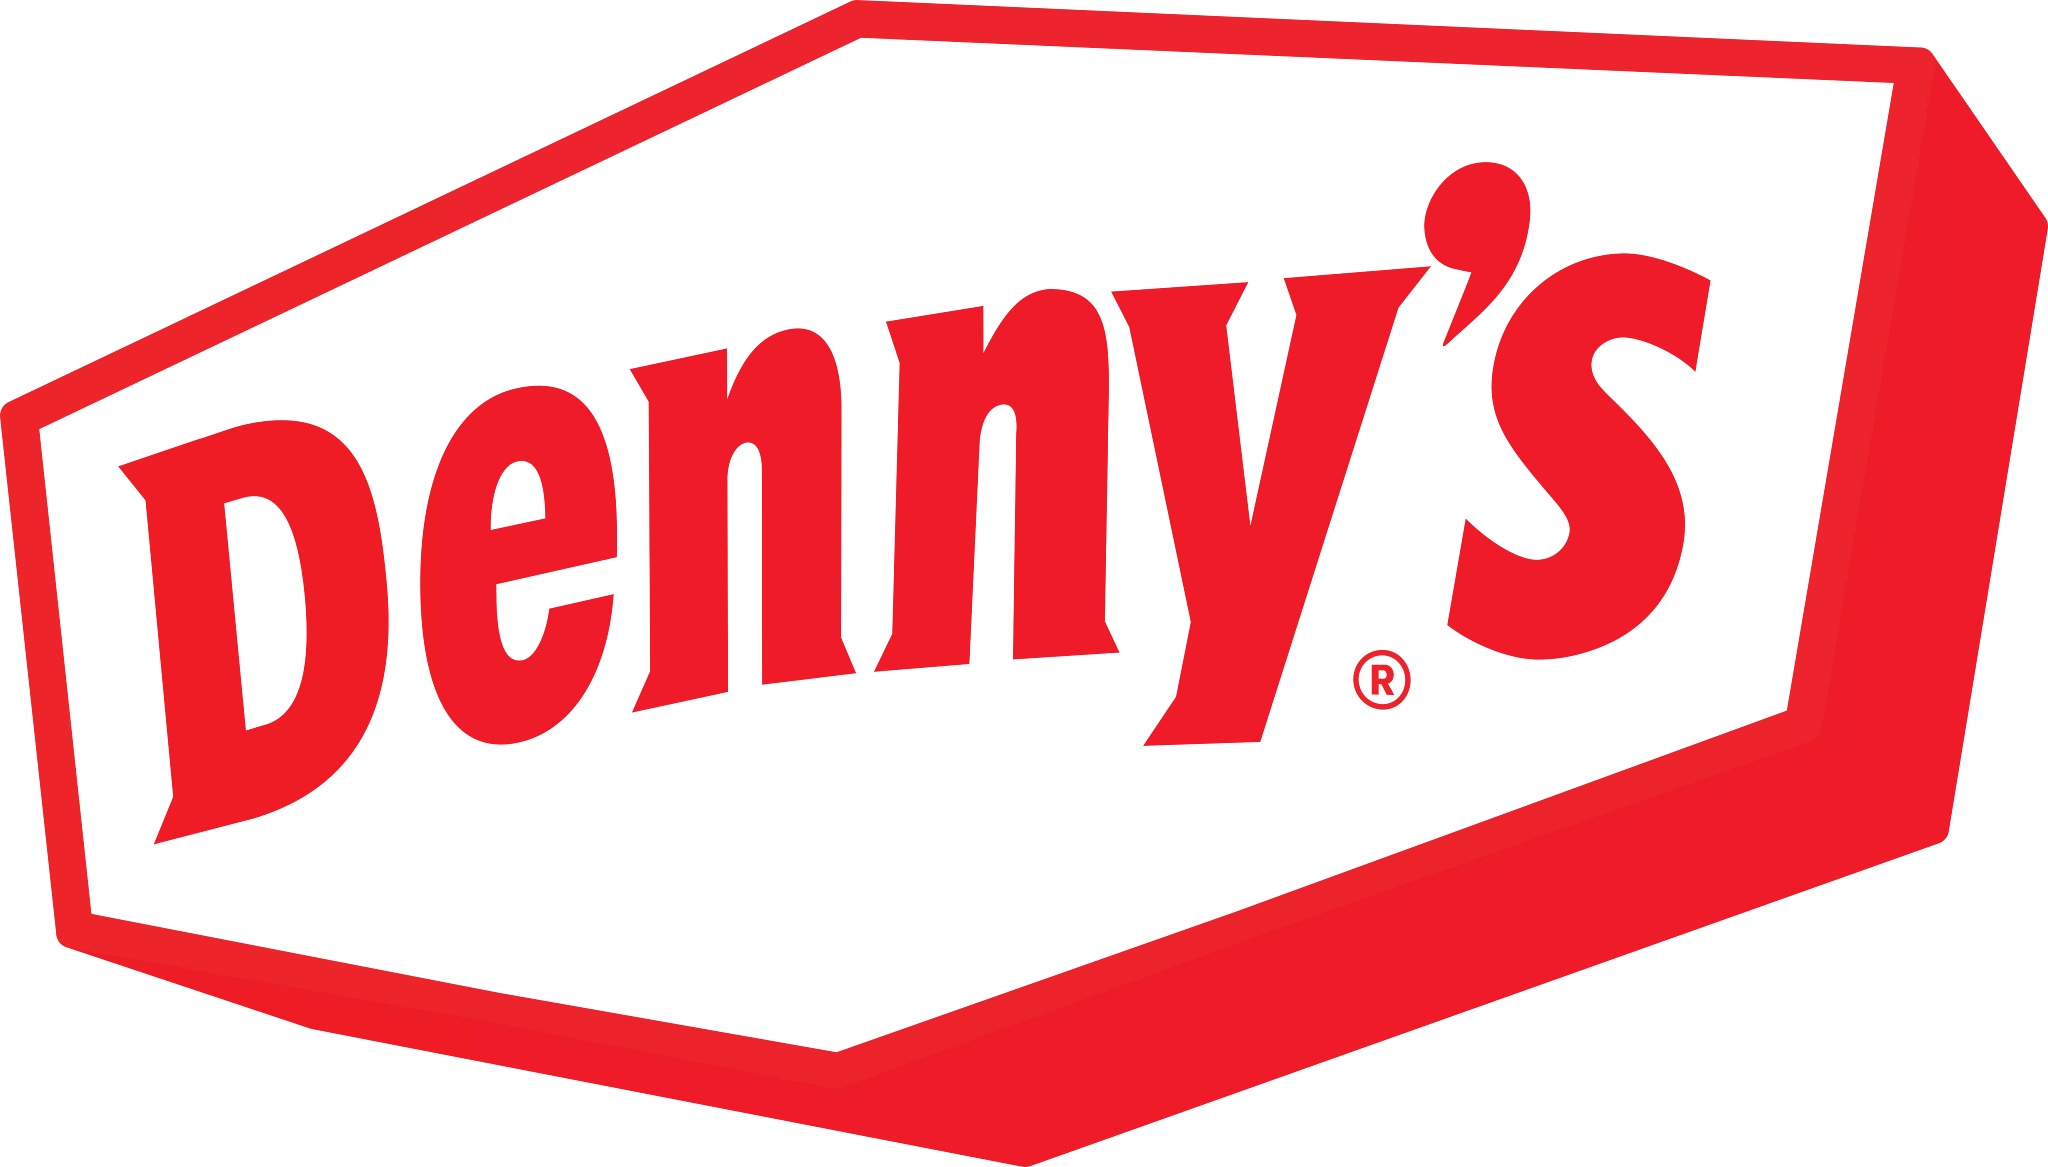 dennys locations